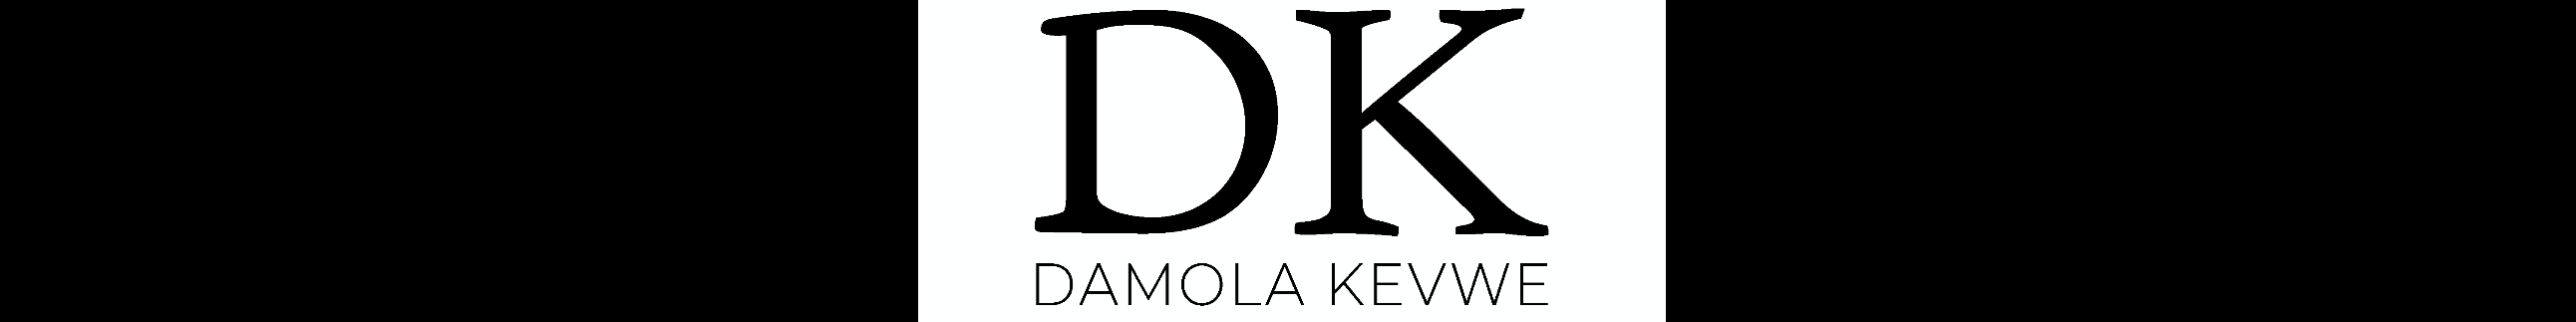 Damola Kevwe profil başlığı